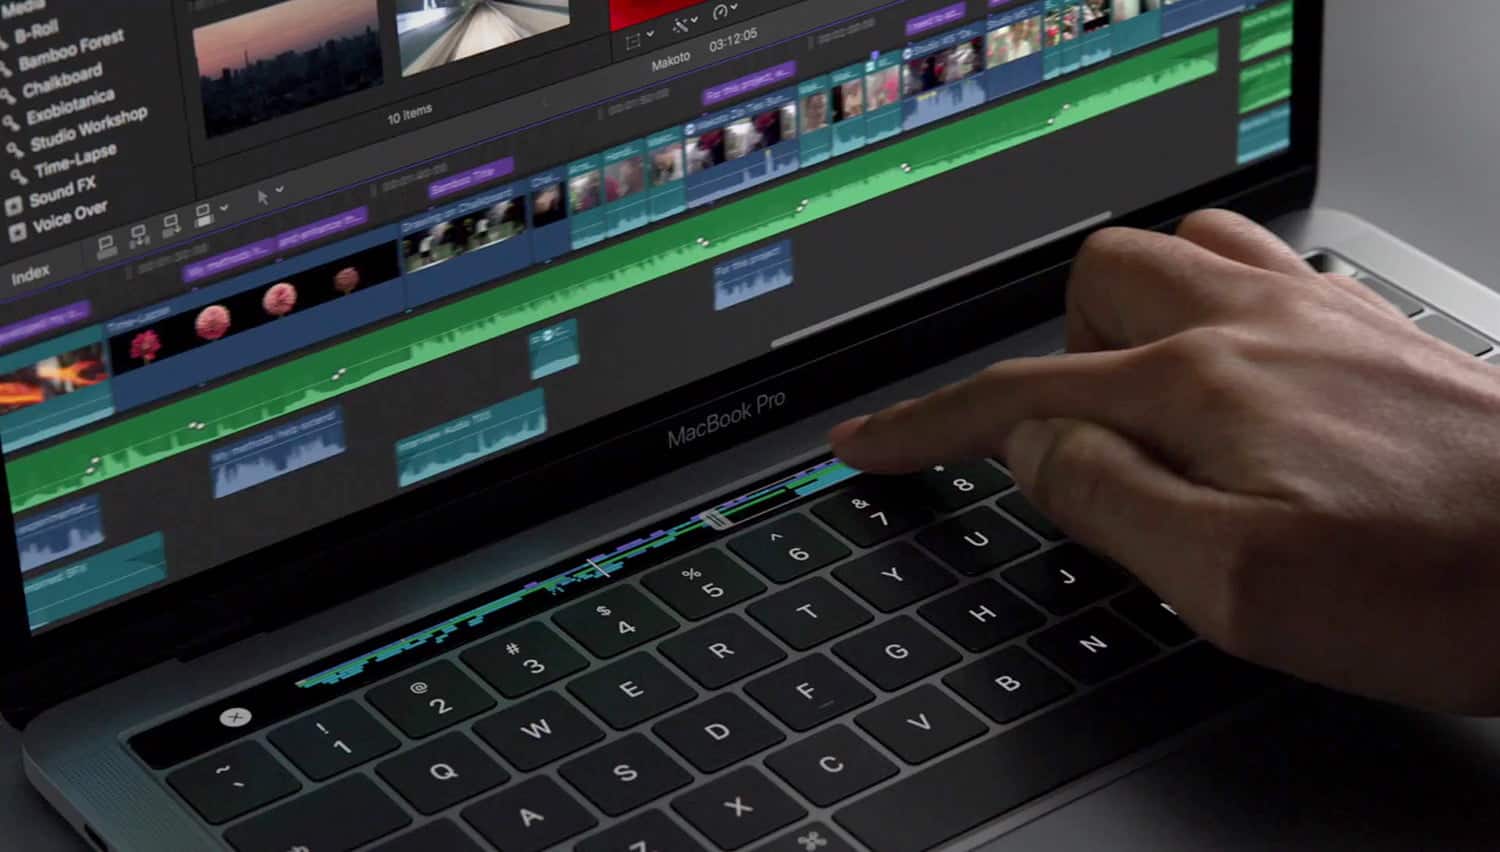 Apple should ditch the TouchBar on MacBook Pro